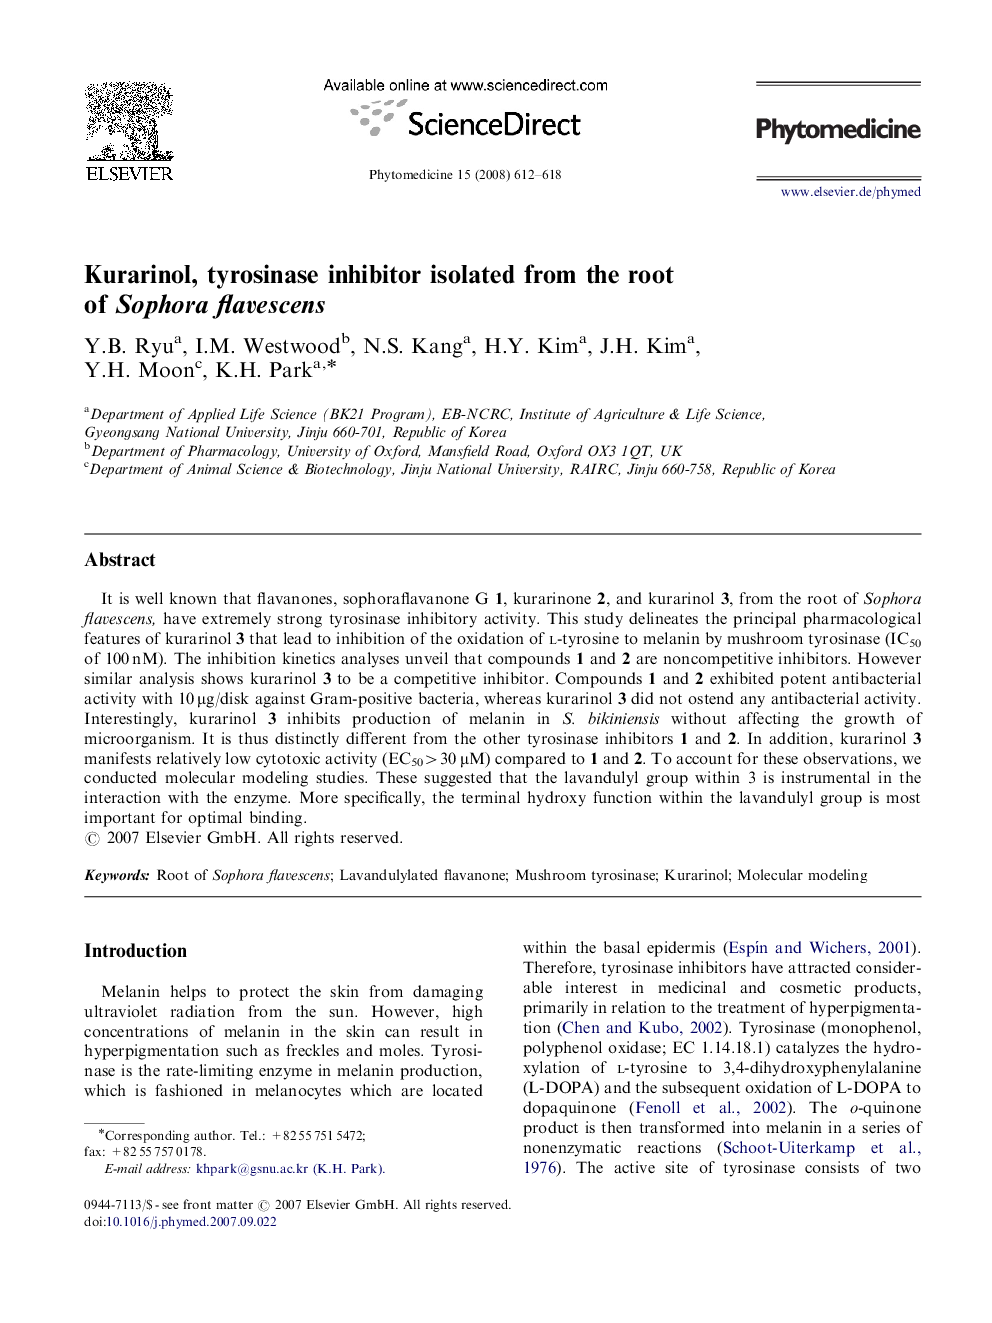 Kurarinol, tyrosinase inhibitor isolated from the root of Sophora flavescens